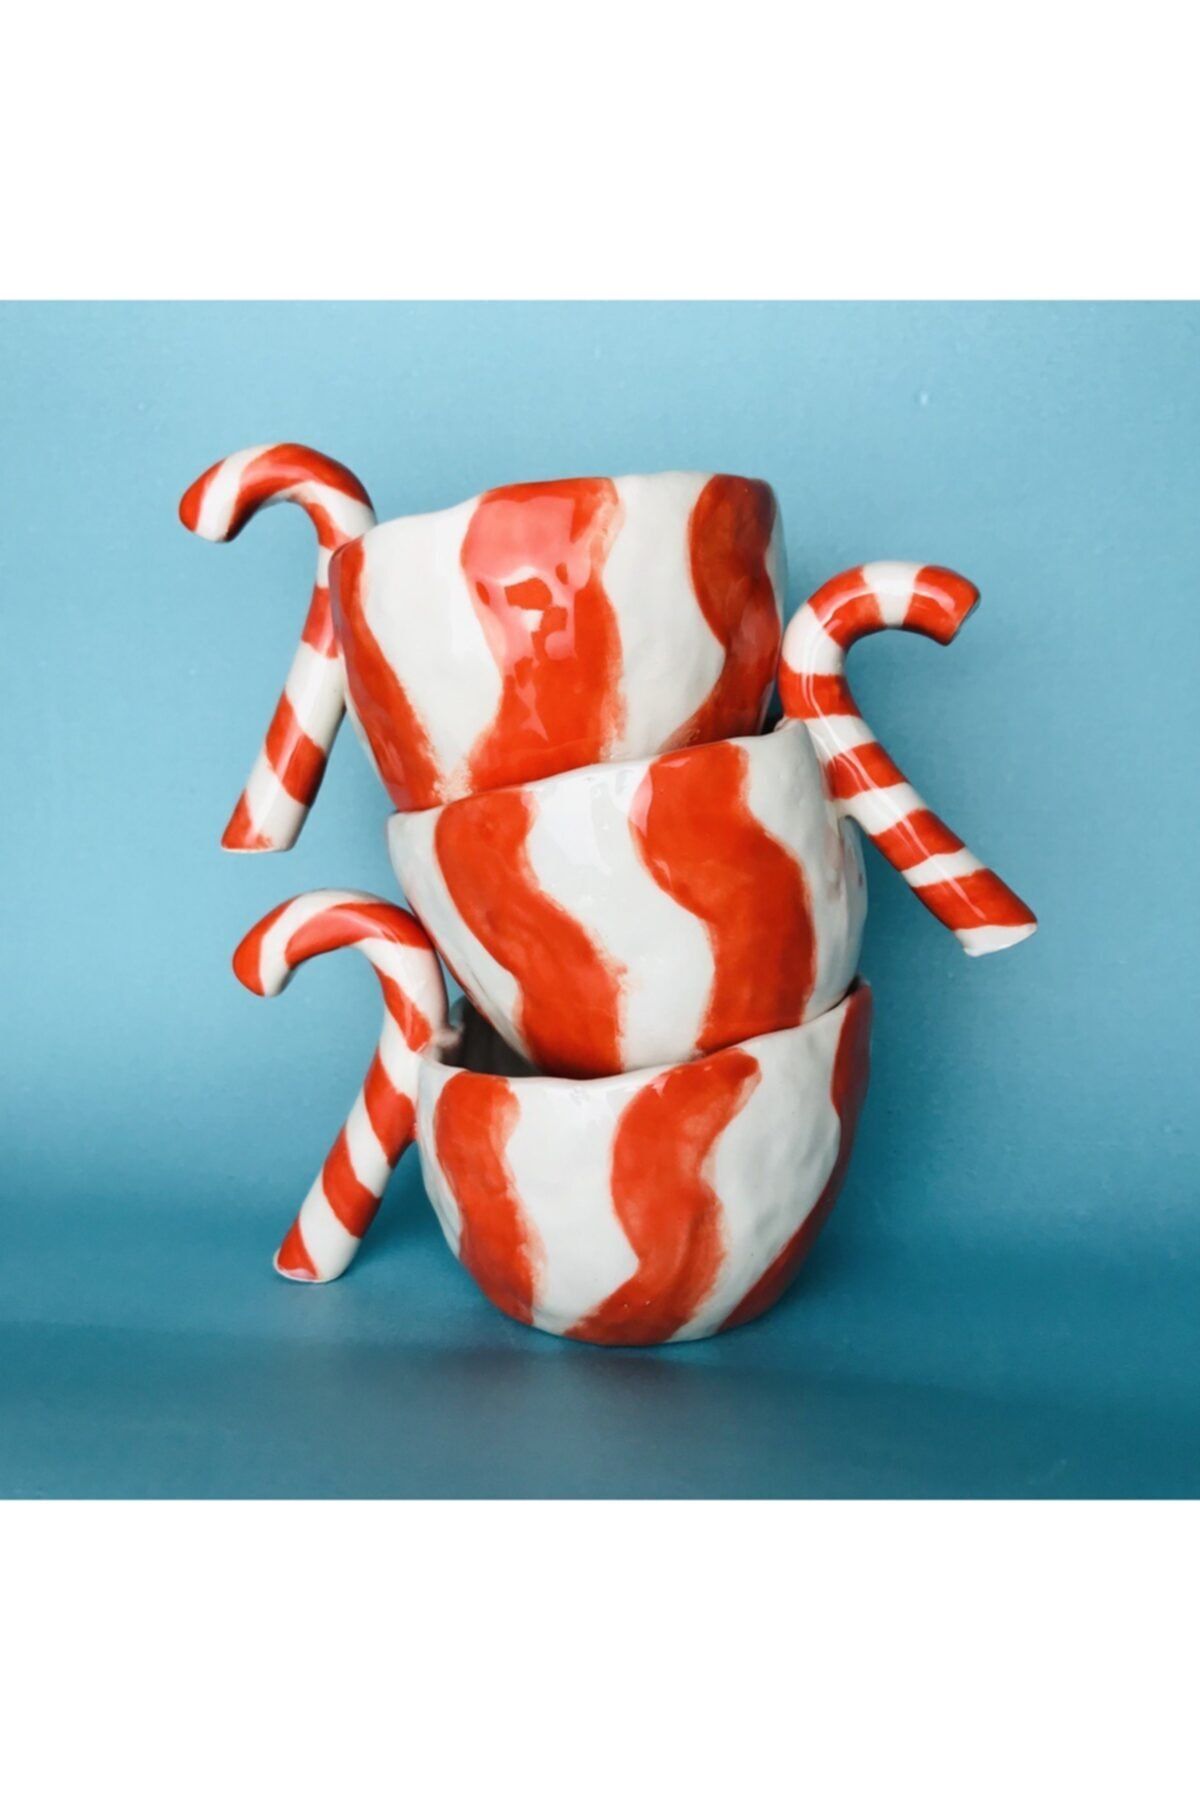 Lily & Loly Ceramics Yılbaşı Serisi “lollipop” Tekli Kupa - Kırmızı Şekerli Kupa - El Yapımı Seramik Mug 120 Ml.